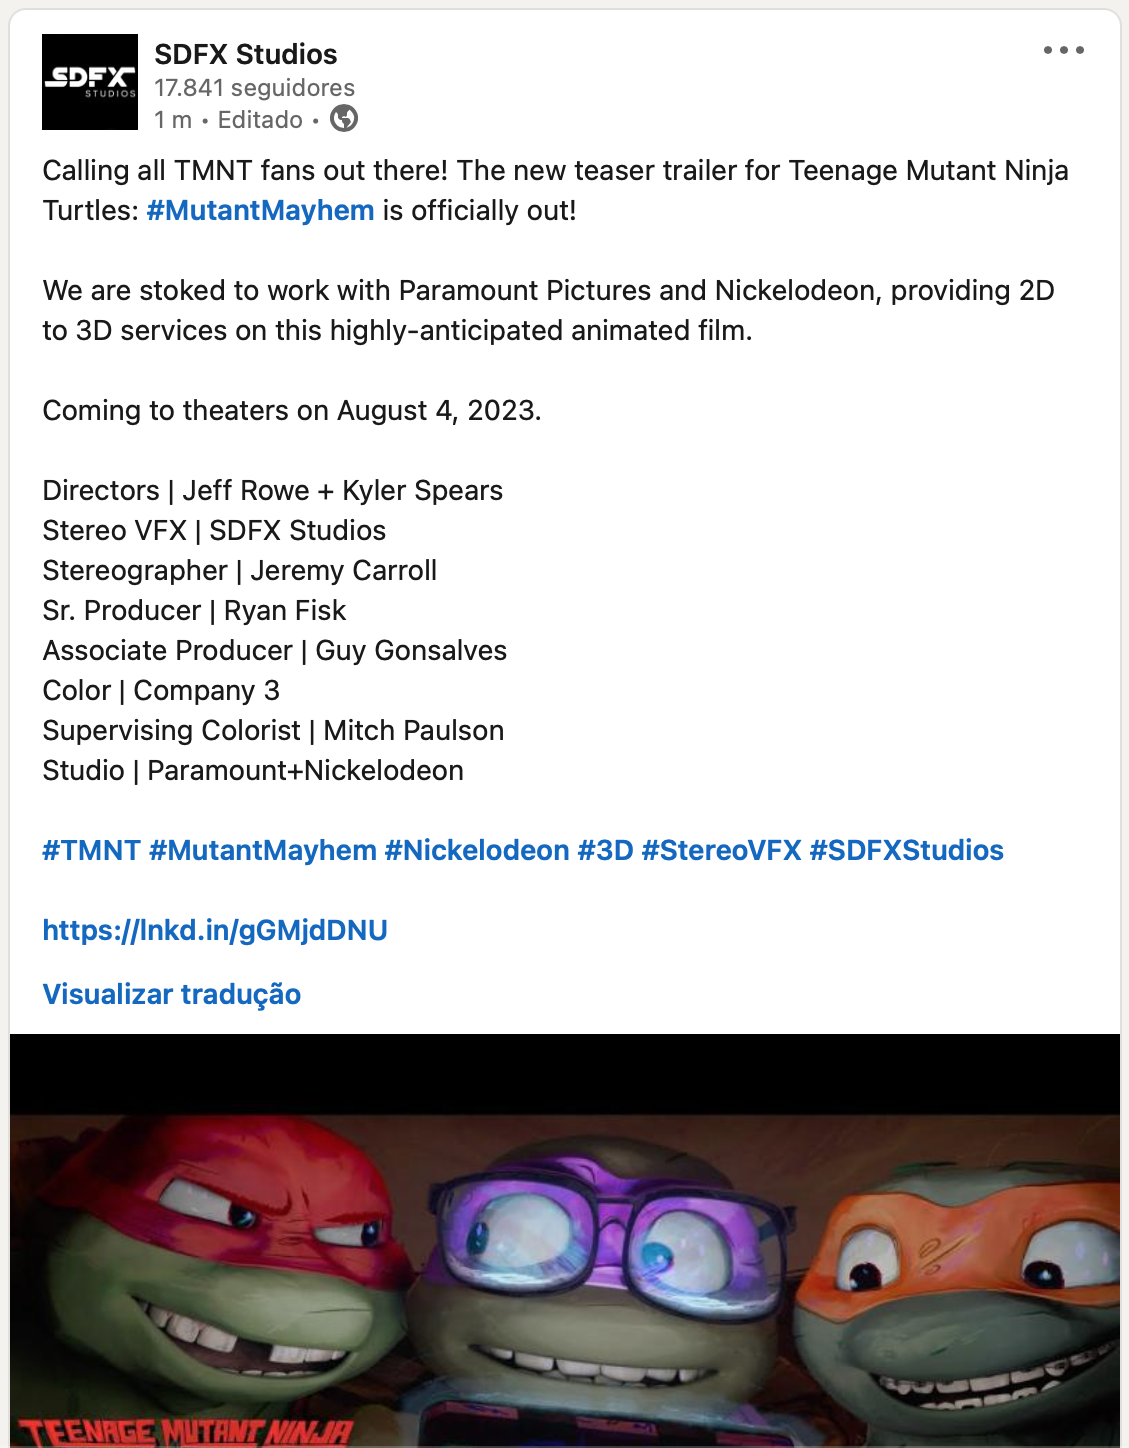 Teenage Mutant Ninja Turtles : Mutant Mayhem (2023) [No 3D Blu-ray] - Blu- ray Forum